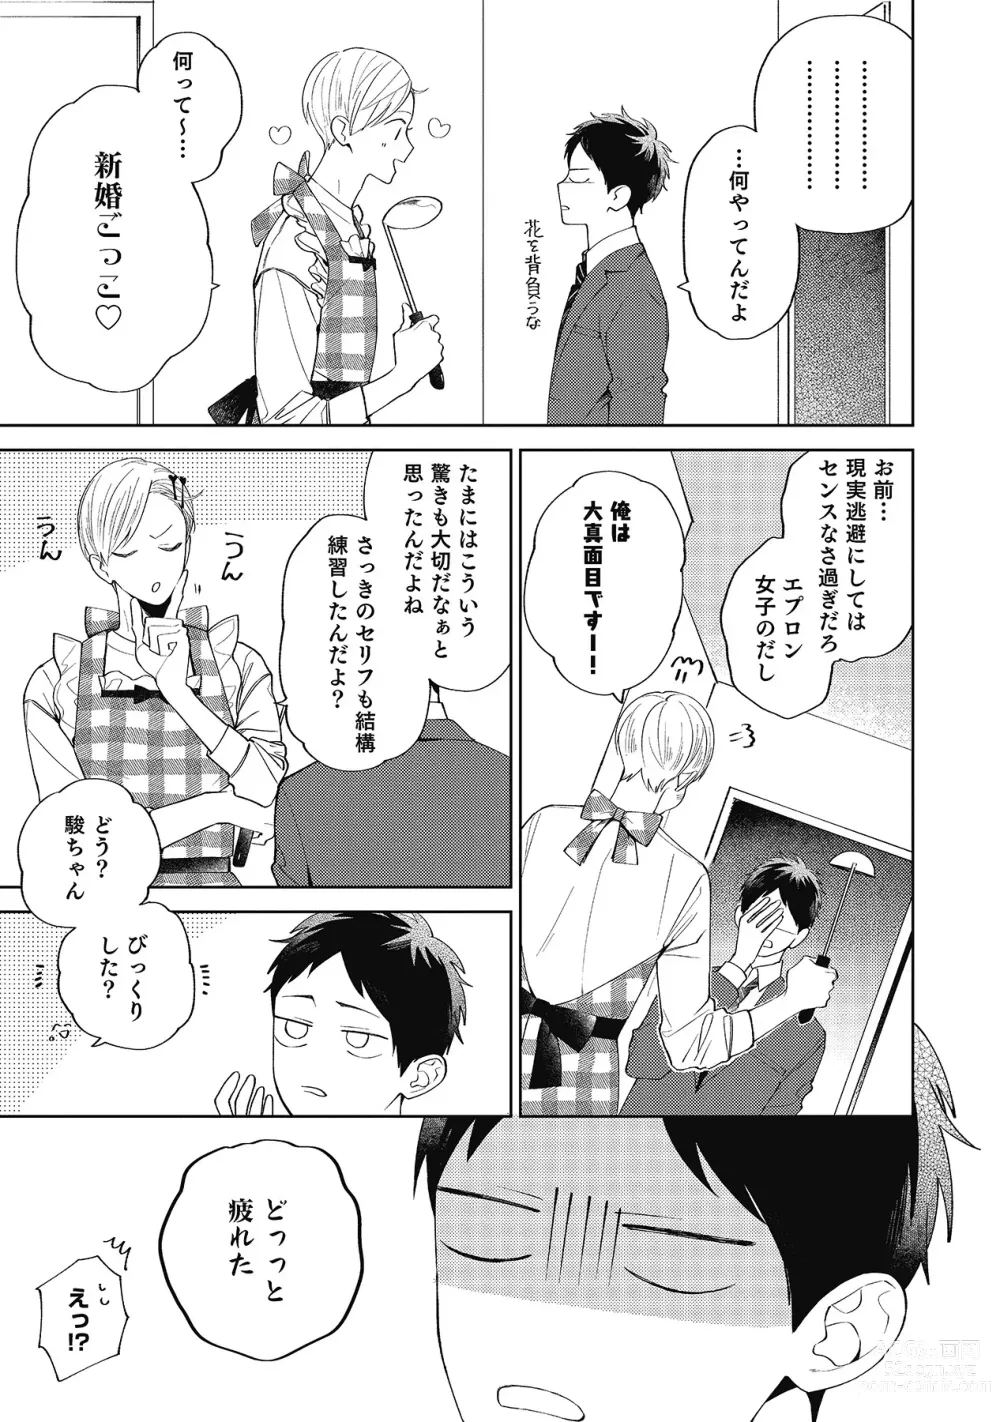 Page 17 of manga Sentimental Darling